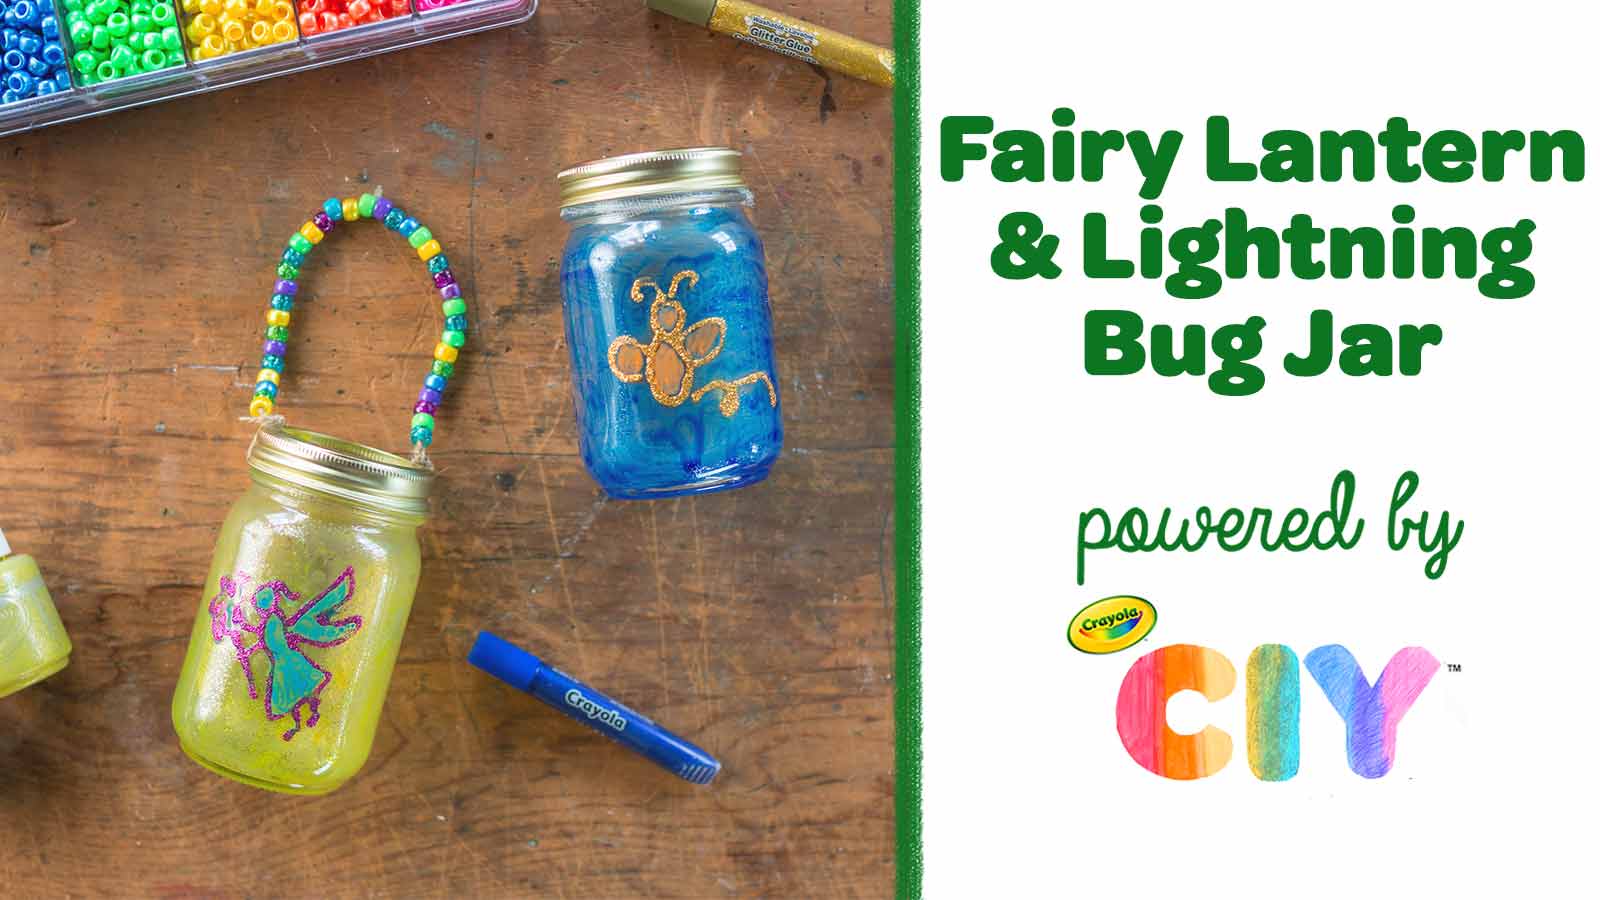 Fairy Lantern and Lightning Buy Jar CIY Video Poster Frame